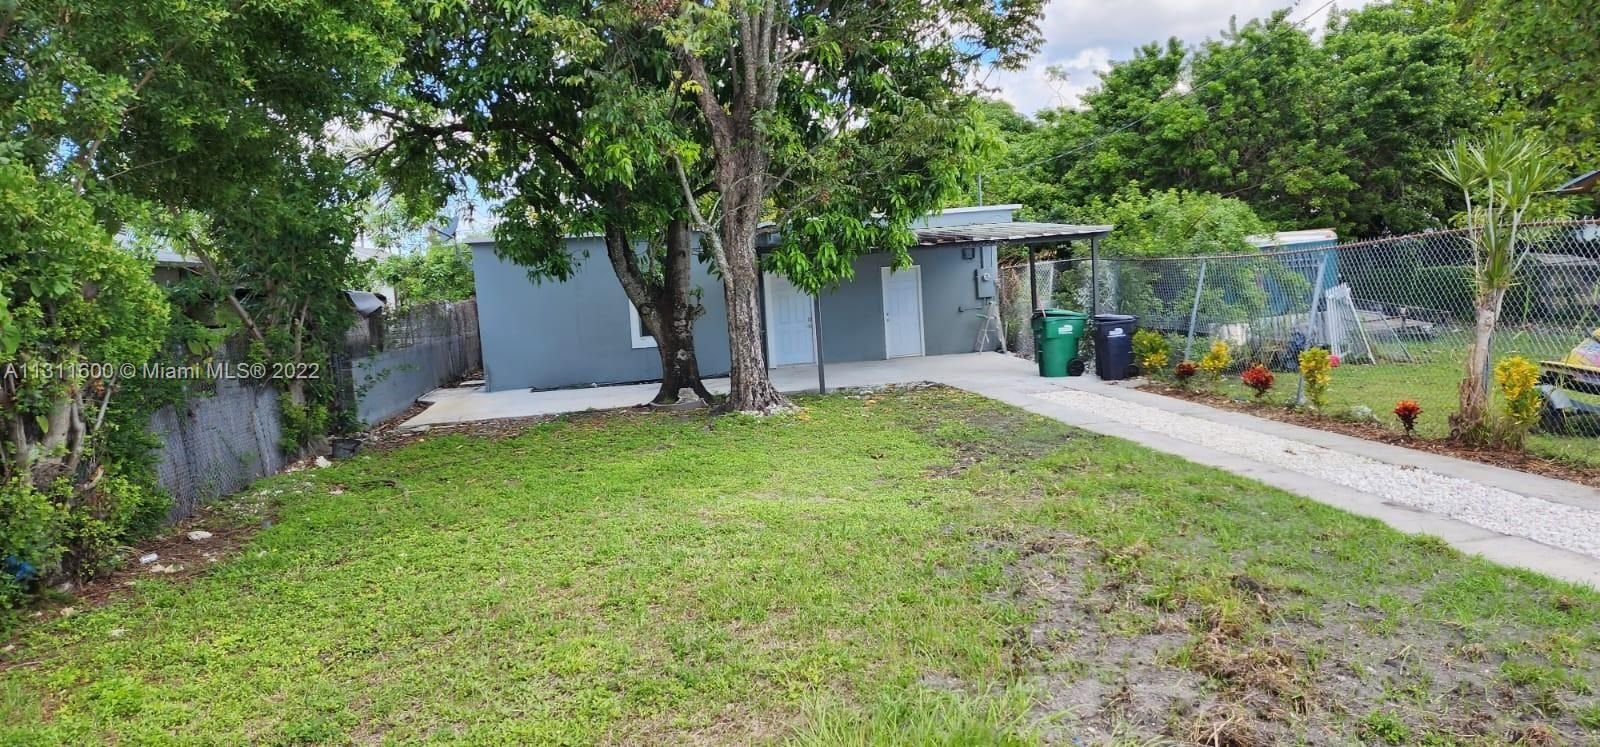 Real estate property located at 2425 56th St, Miami-Dade County, Miami, FL